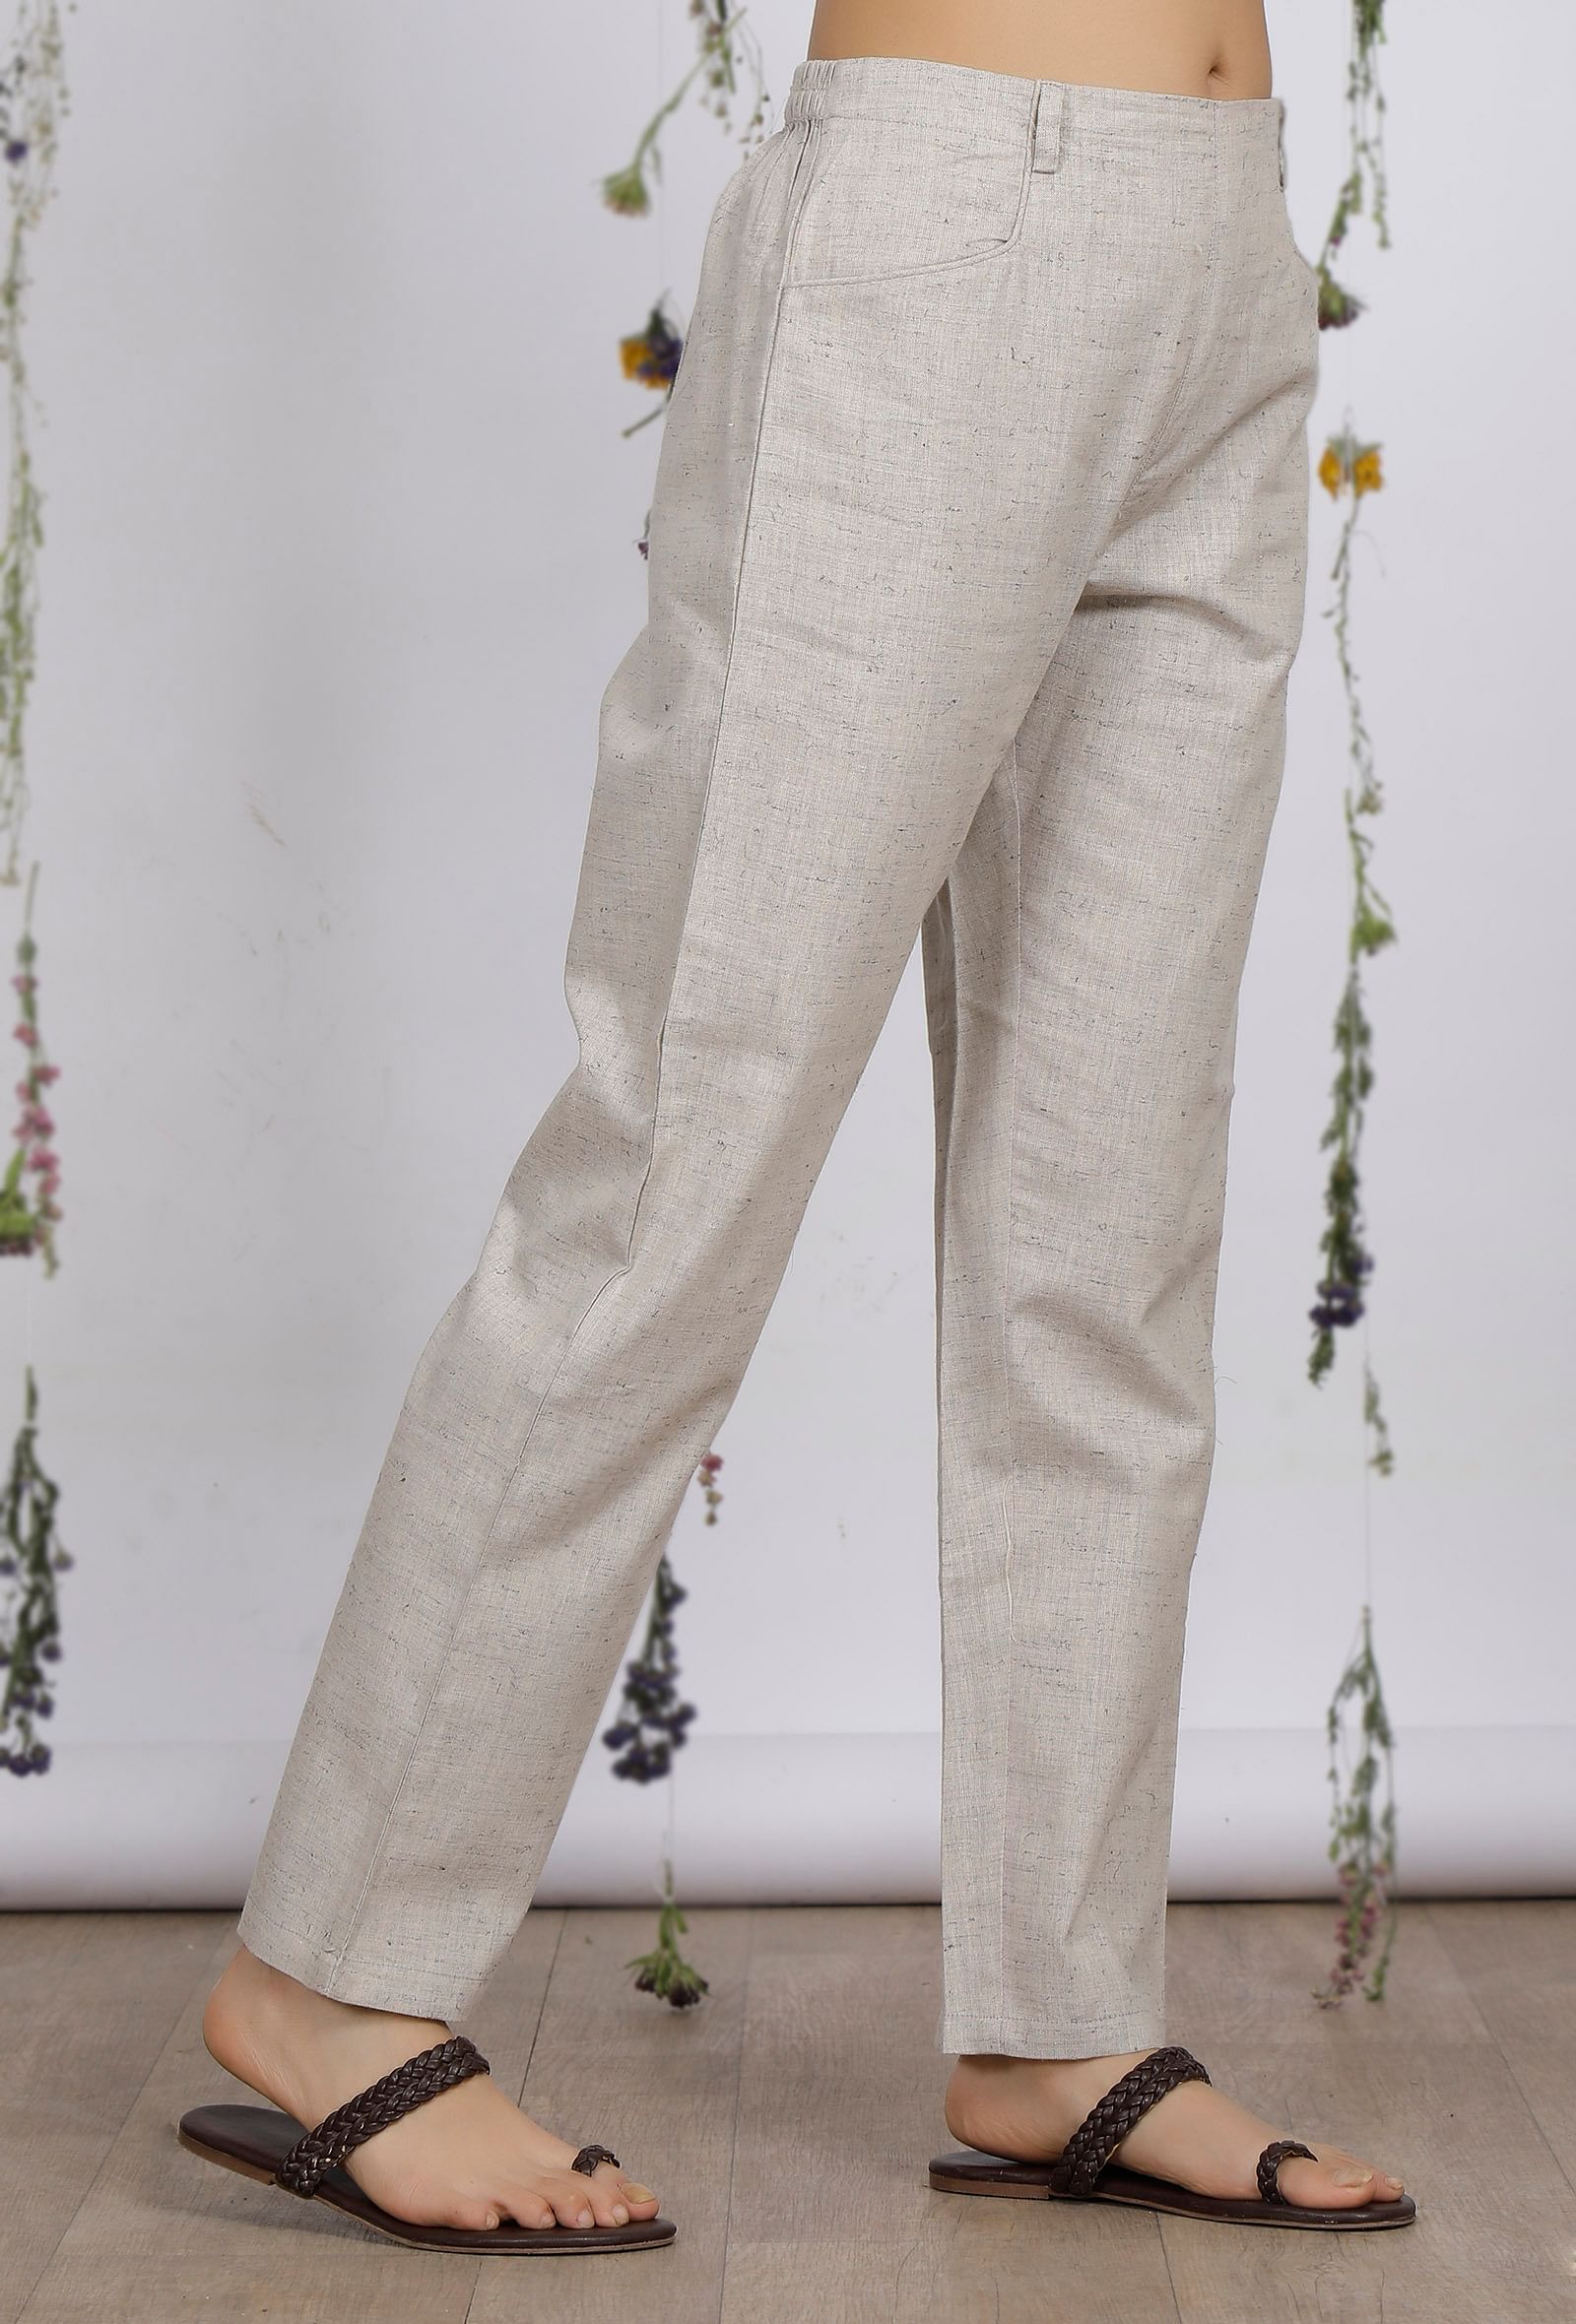 Grey Cotton Khadi Pants | Cotton pants women, Summer cotton tops, Pants for  women